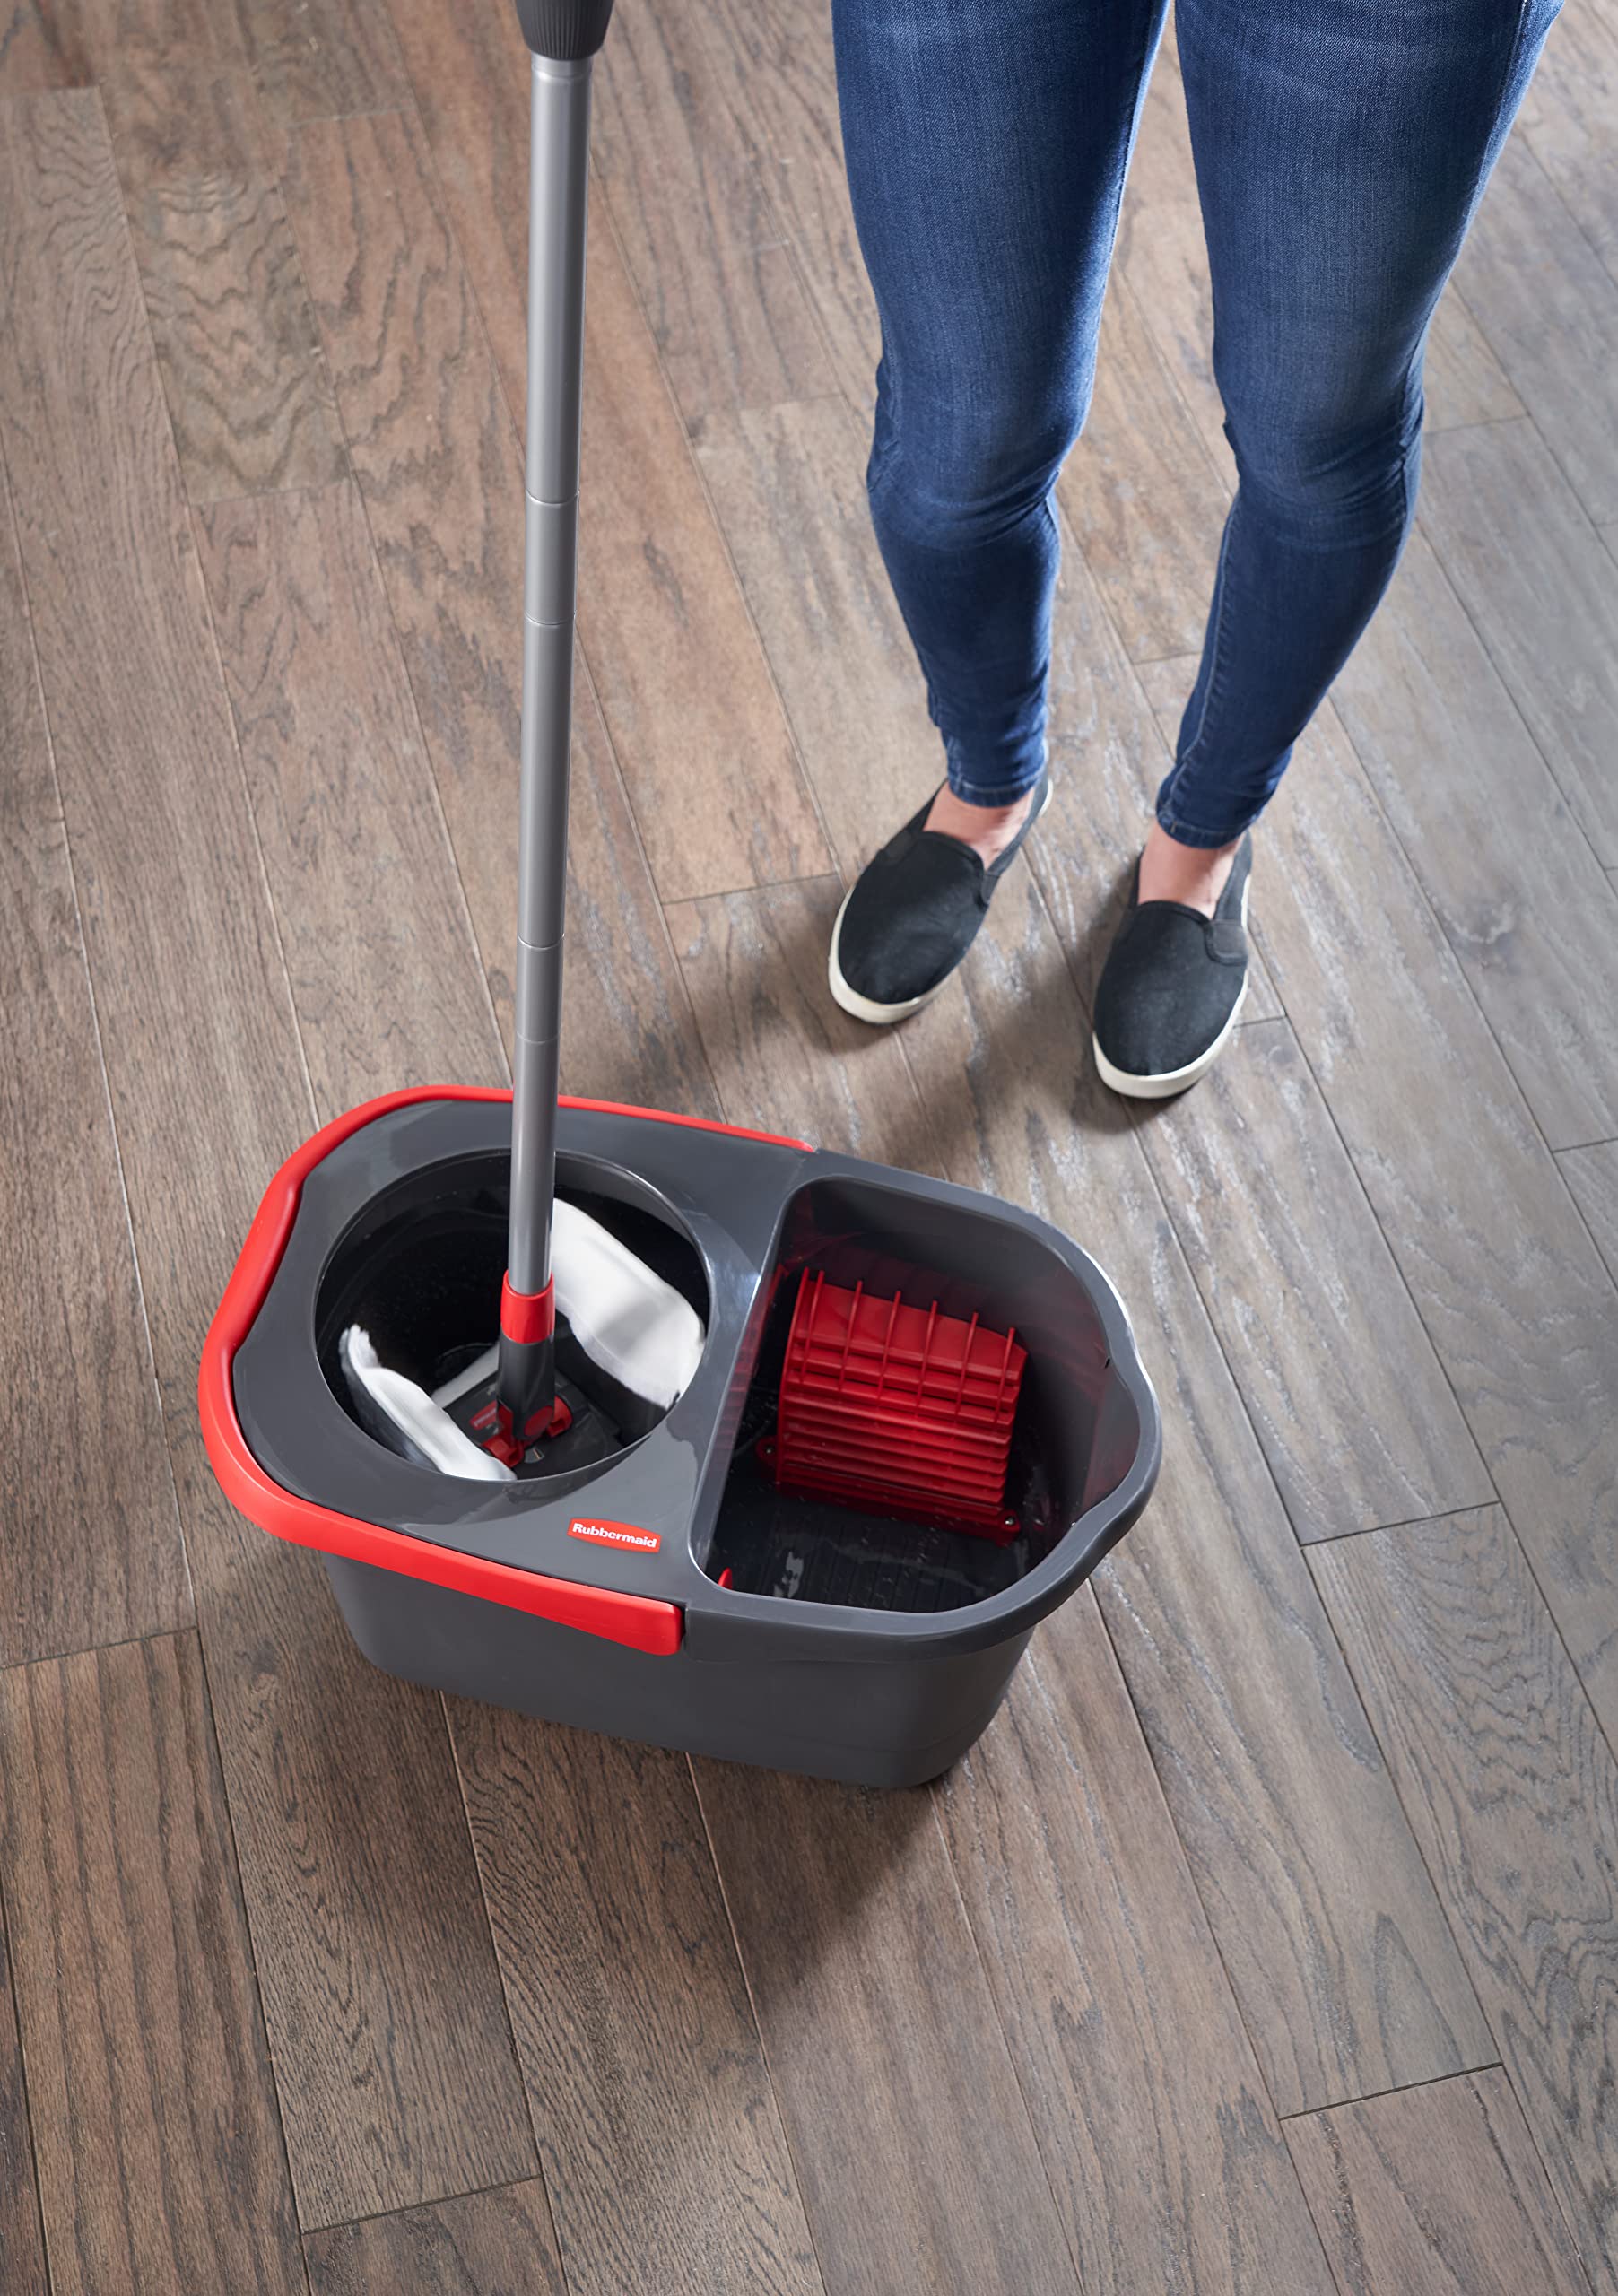 Rubbermaid Microfiber Flat Spin Mop Floor Cleaning System with Wringer Bucket, Red, Flat Floor Mop for Hardwood/Laminate/Vinyl/Tile/Stone Floors